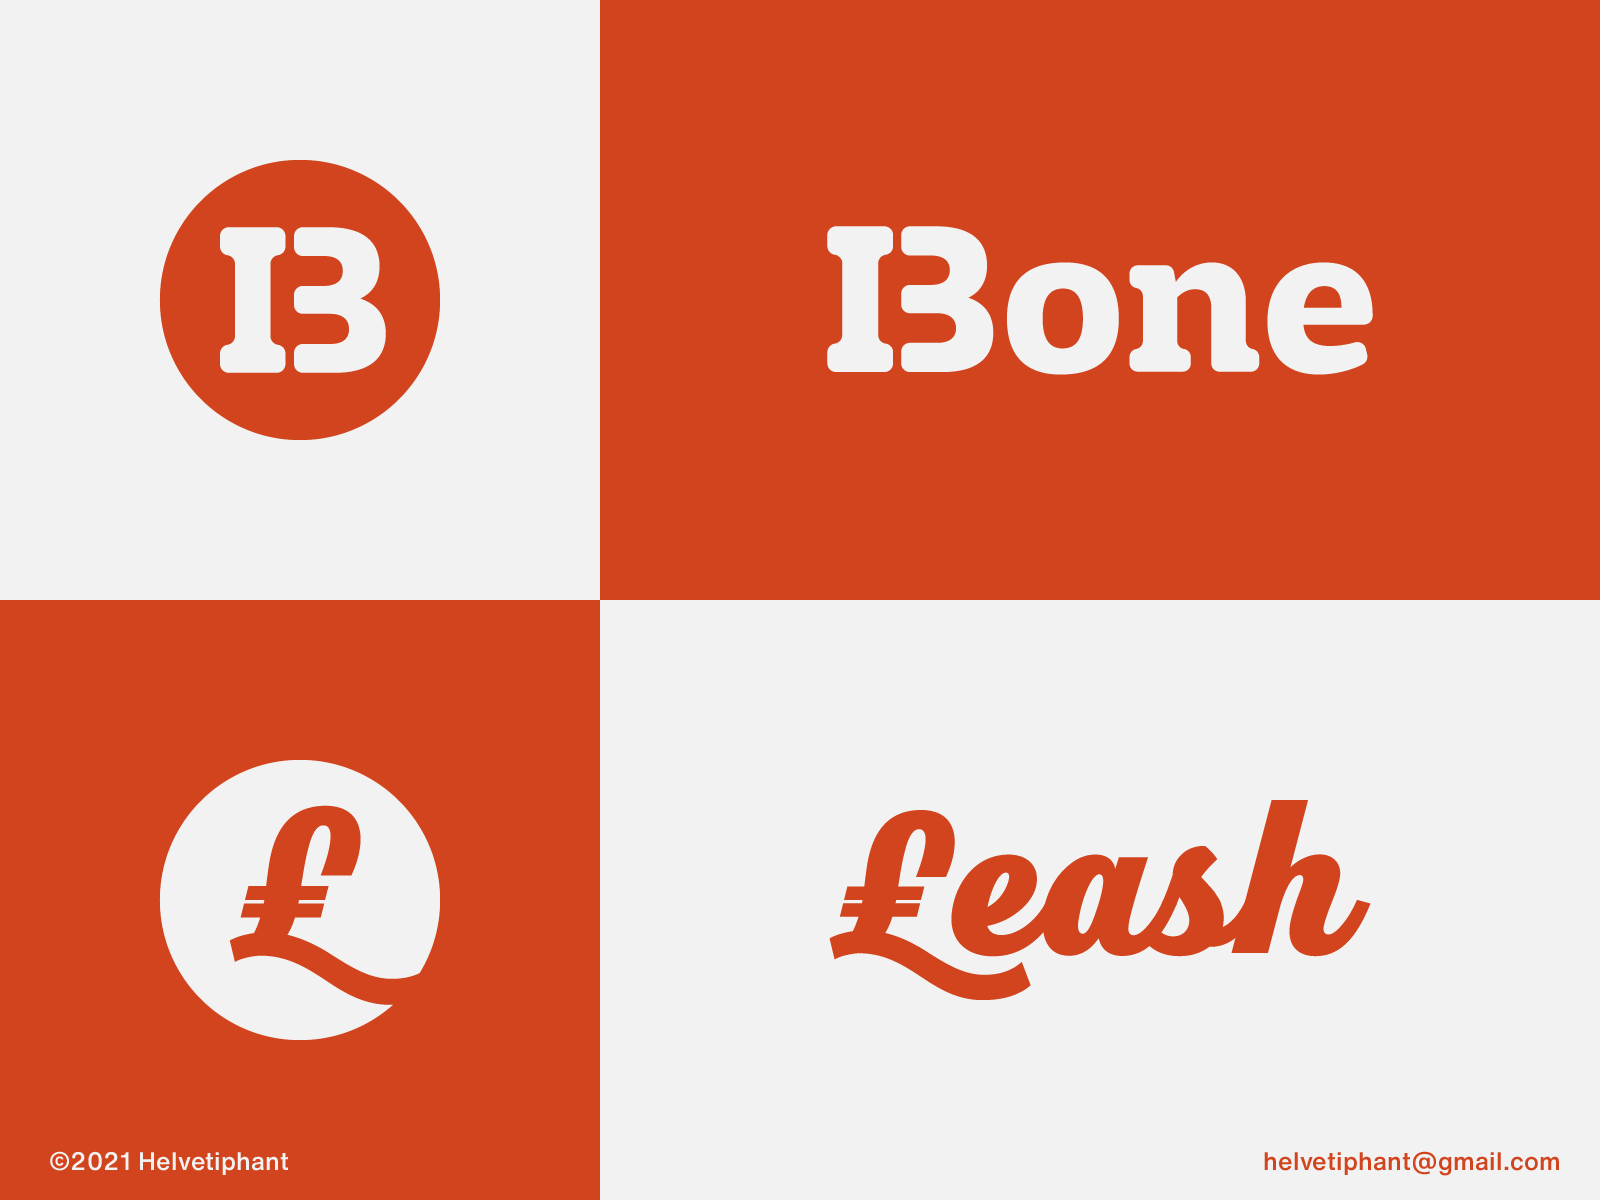 Bone & Leash - logo concepts for Shiba Inu Coin by ...